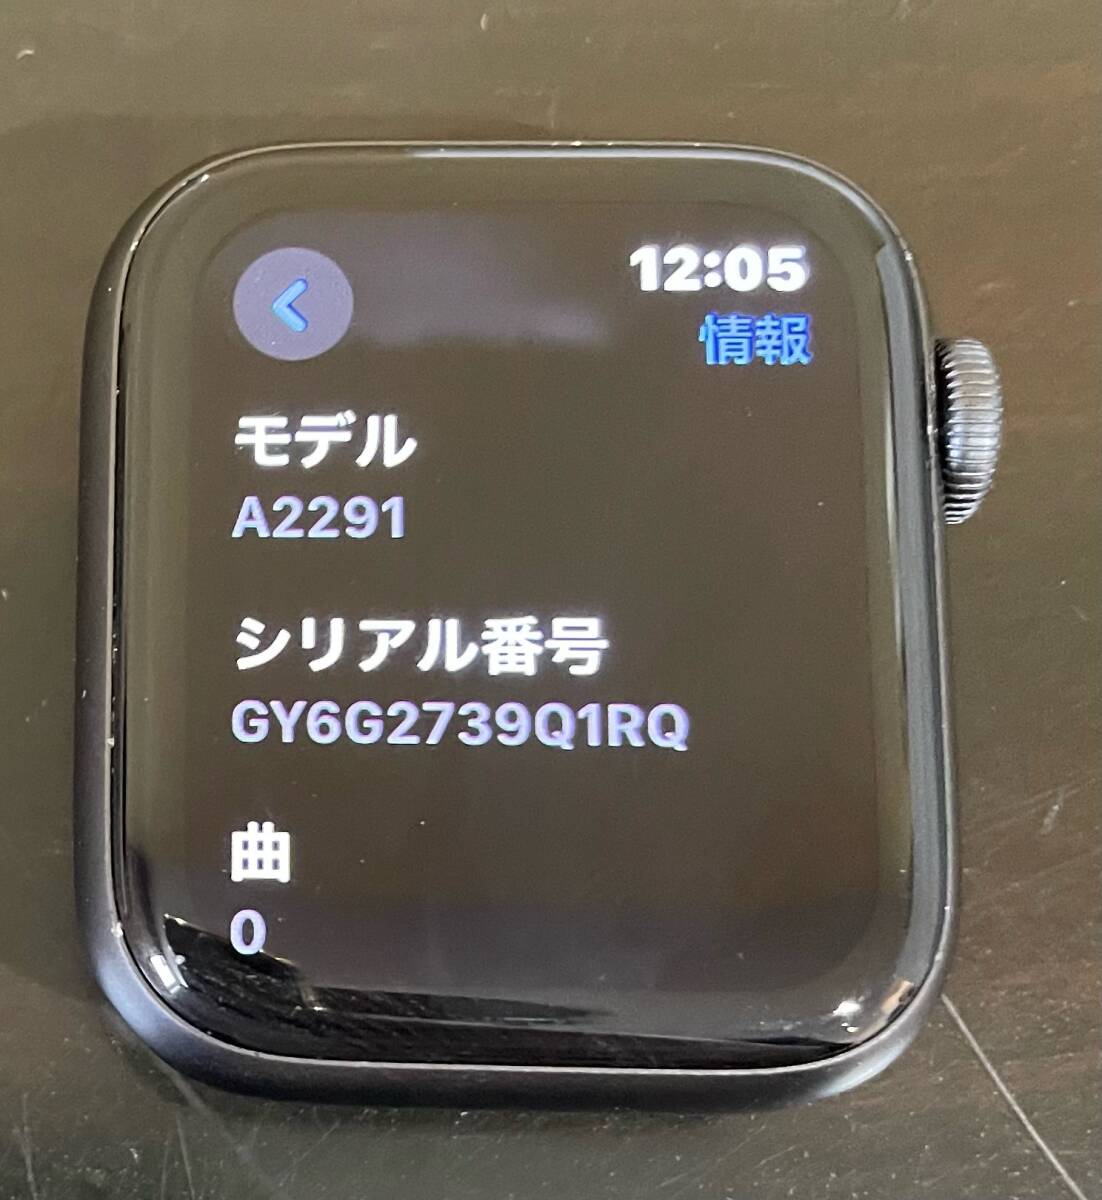  дешевый!! 99 иен старт!! Apple Watch Apple часы серии 6 GPS модель 40mm A2291 32GB смарт-часы Acty беж .n отмена завершено 